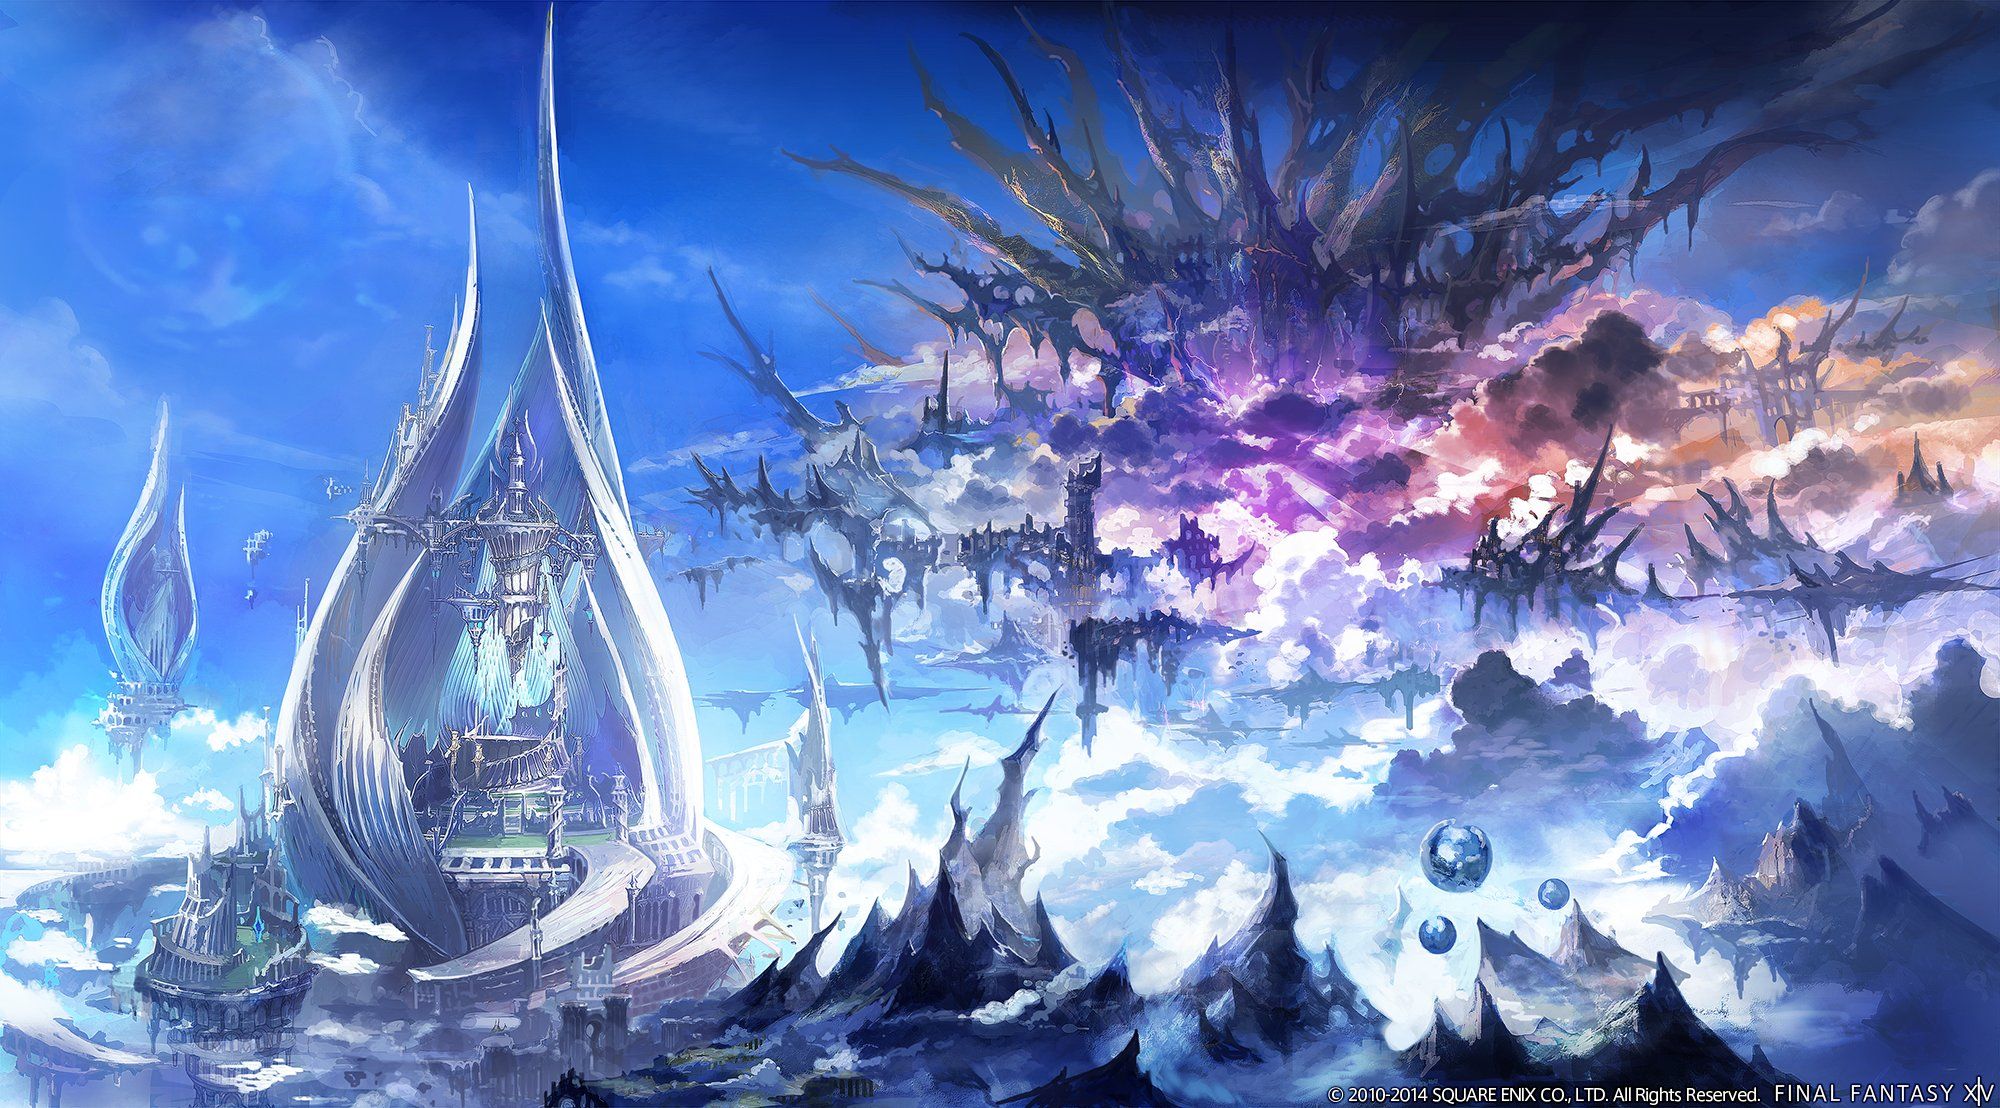 Final Fantasy XIV Celebrates 10th Anniversary with a Majestic 14-Hour Live Stream!